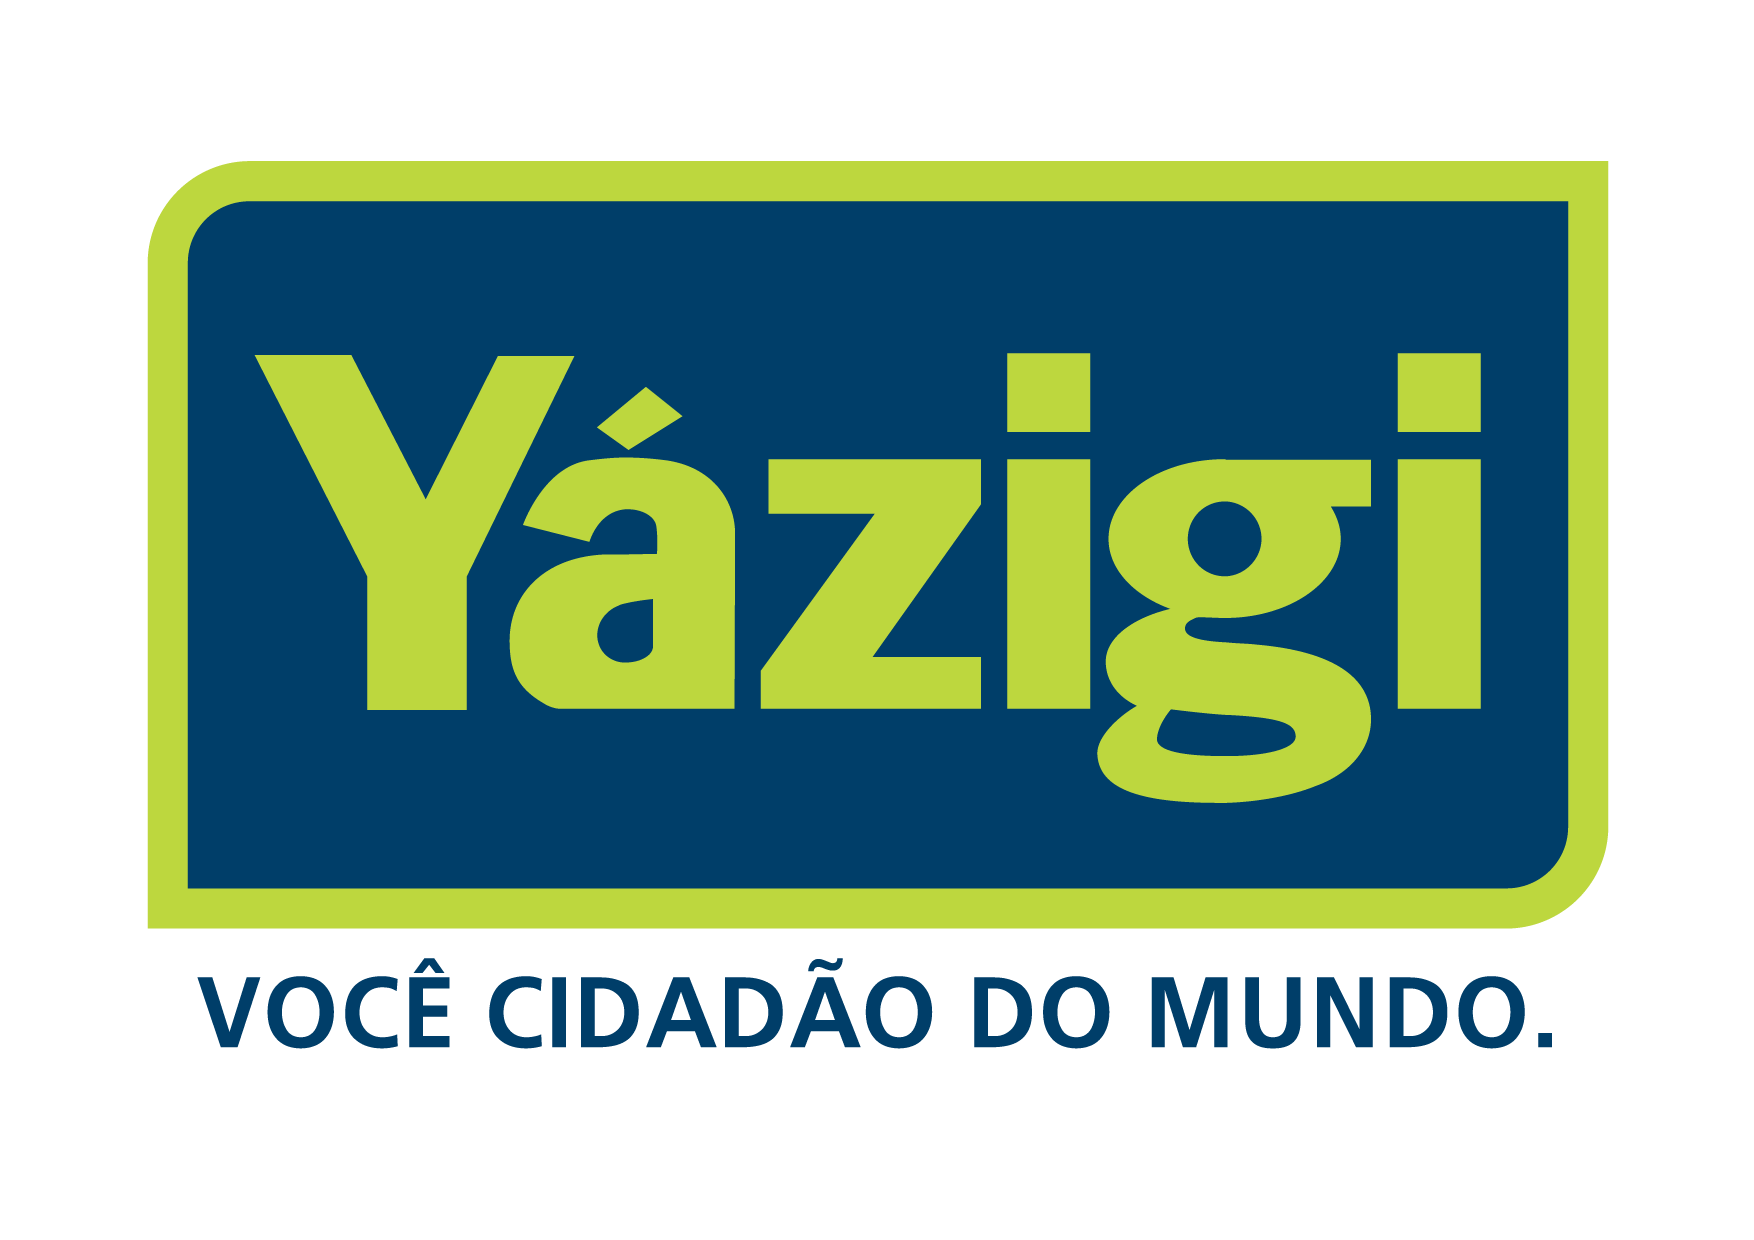 Yázigi Logo photo - 1